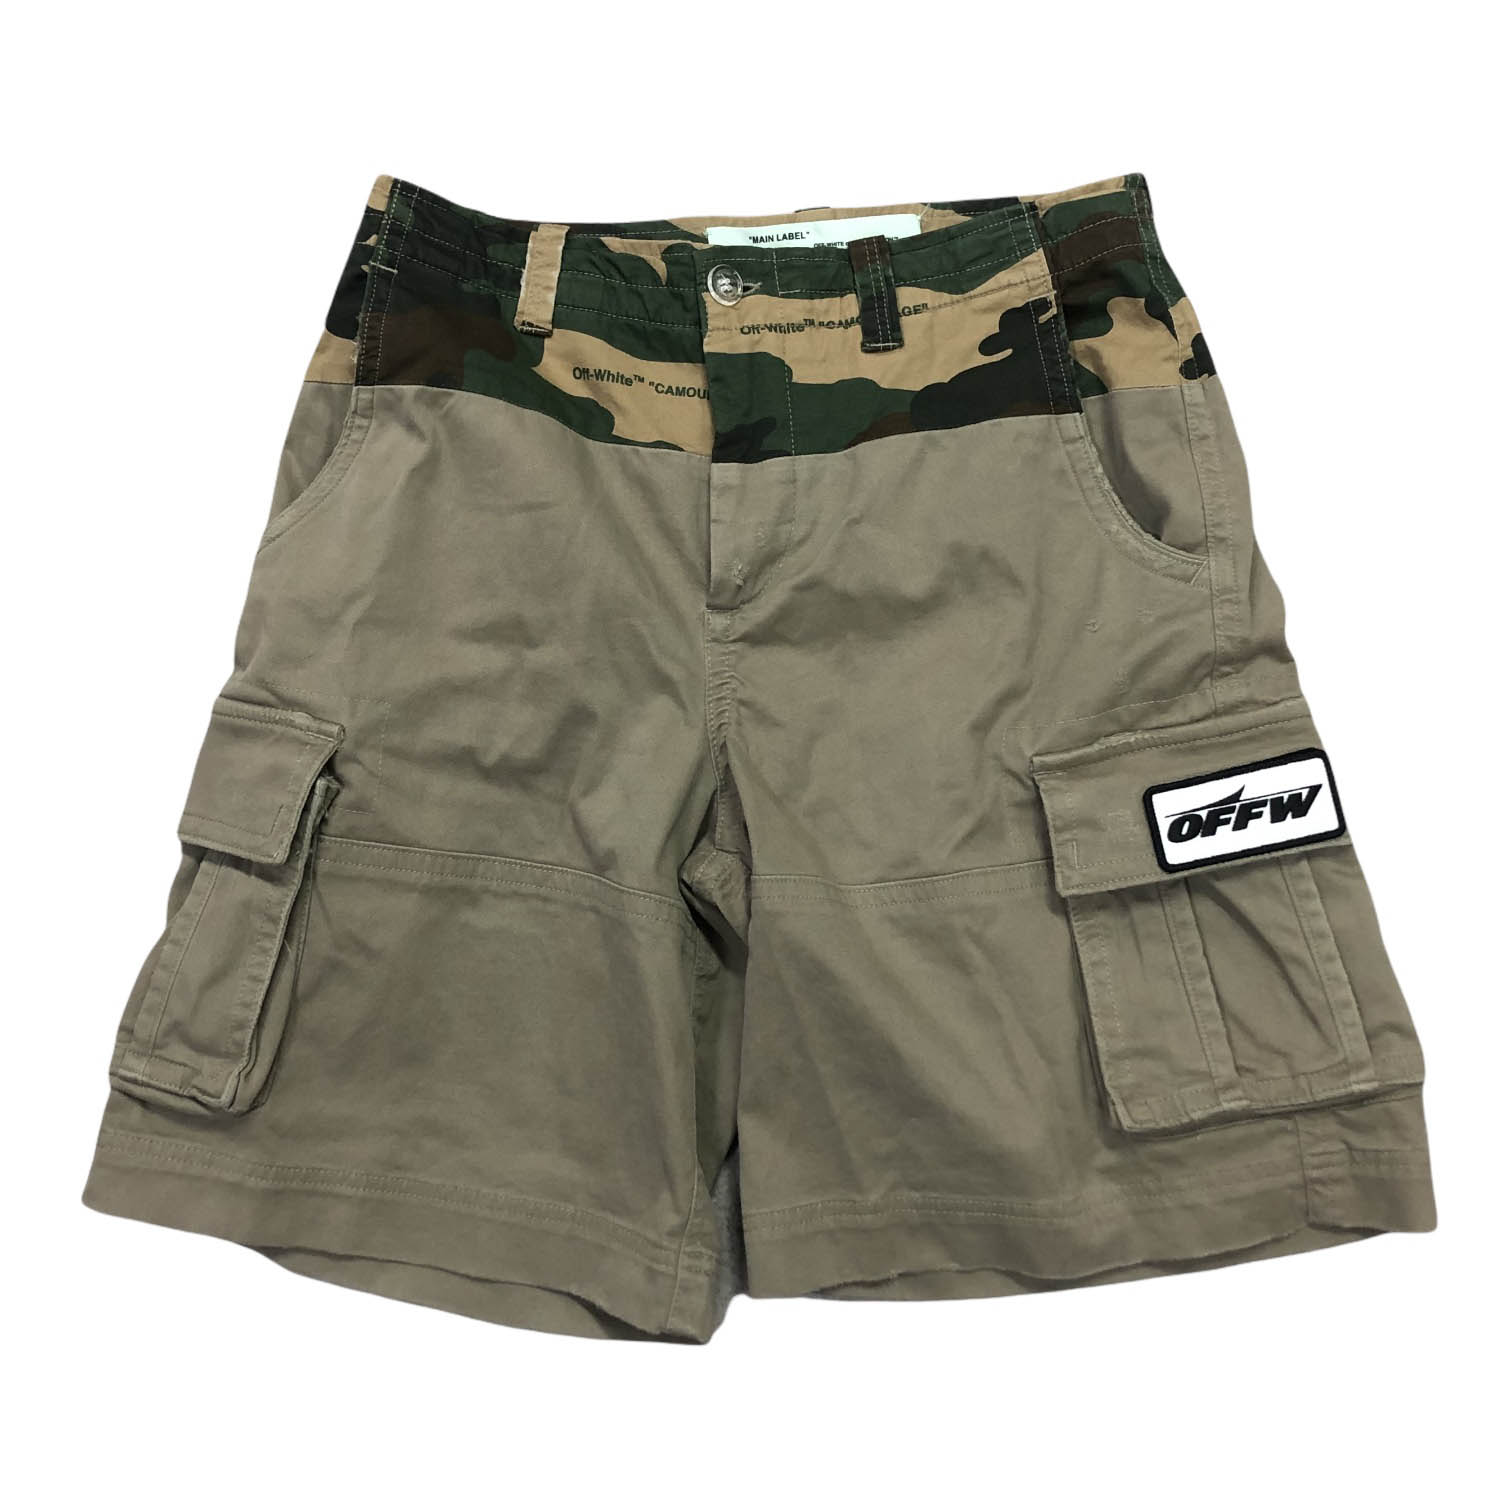 [Off White] Camo Belt Line Cargo Short Pants - SIZE 33